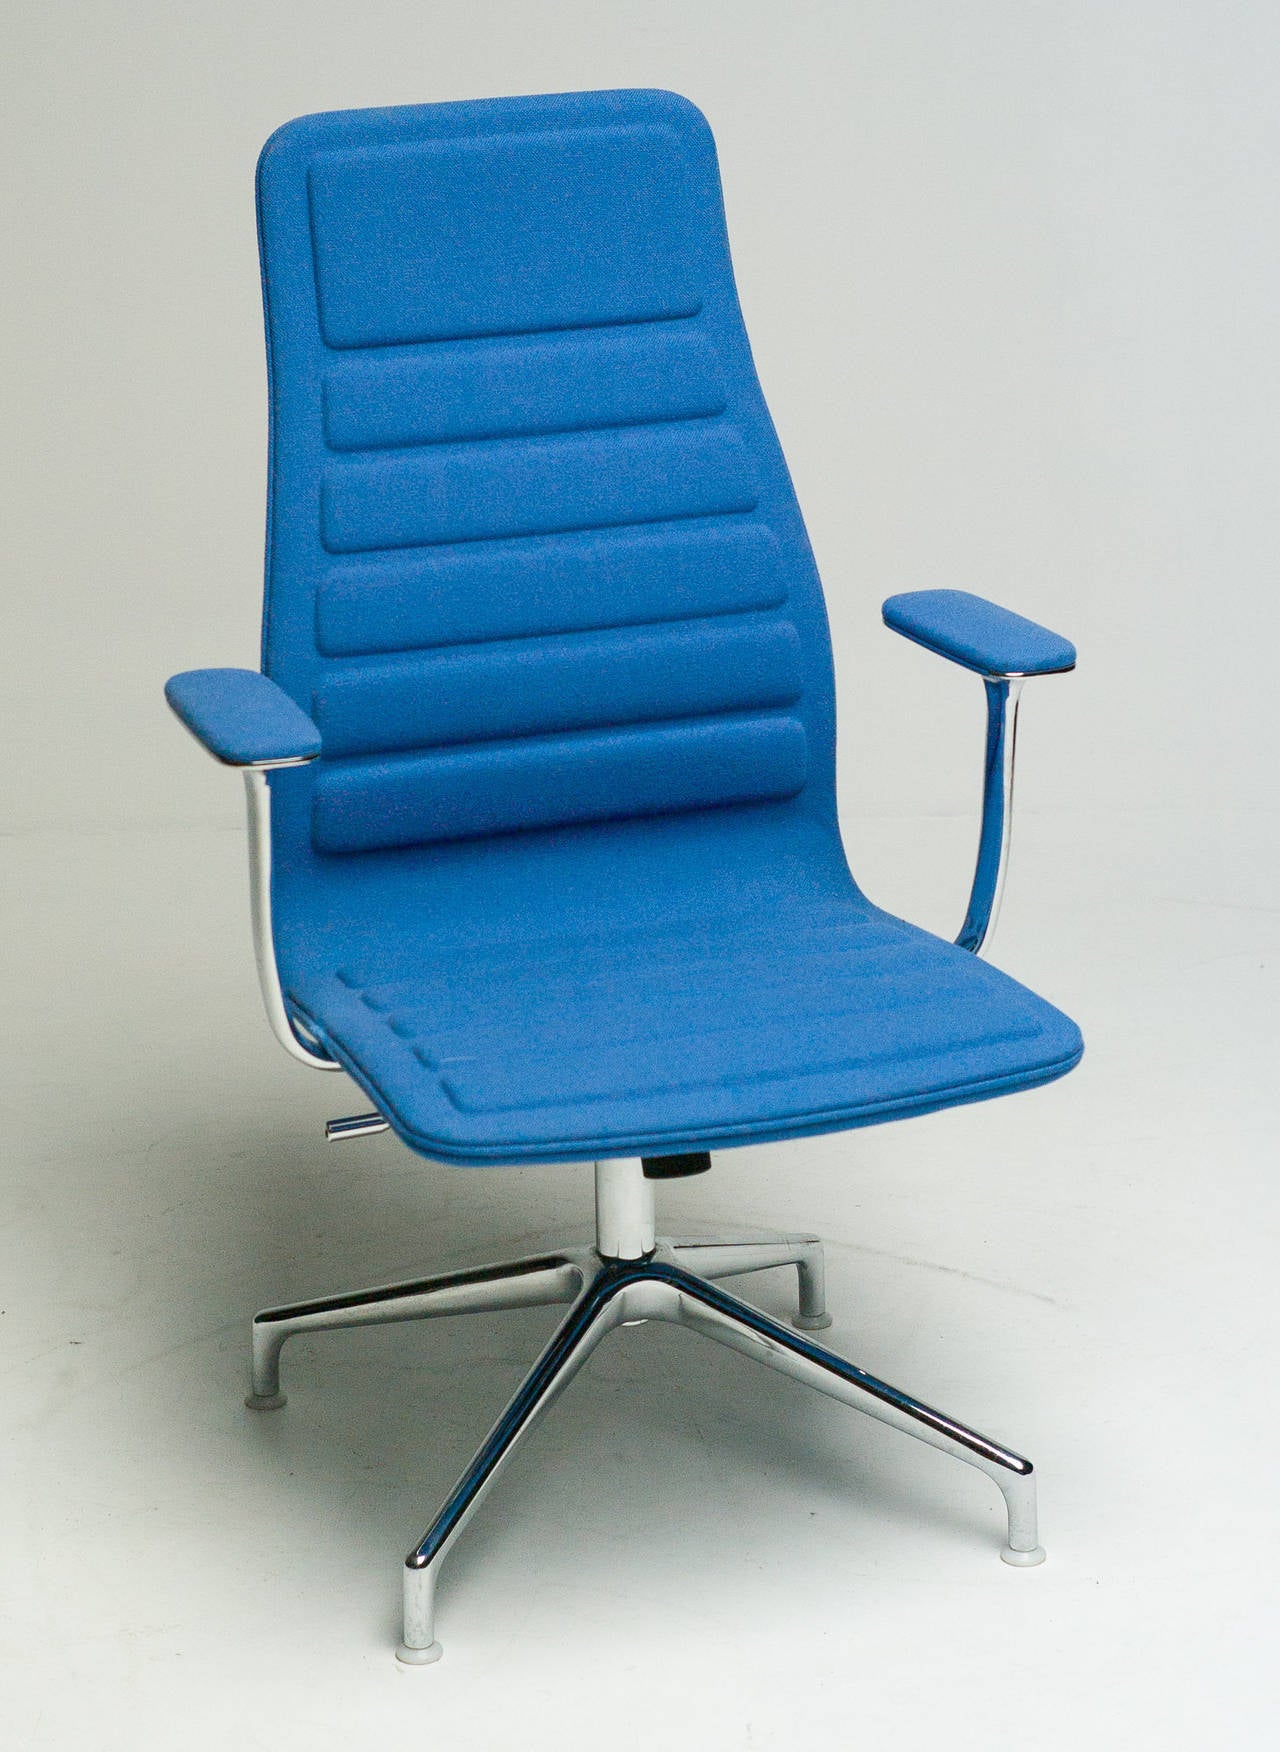 Italian Lotus Chair Designed by Jasper Morrison